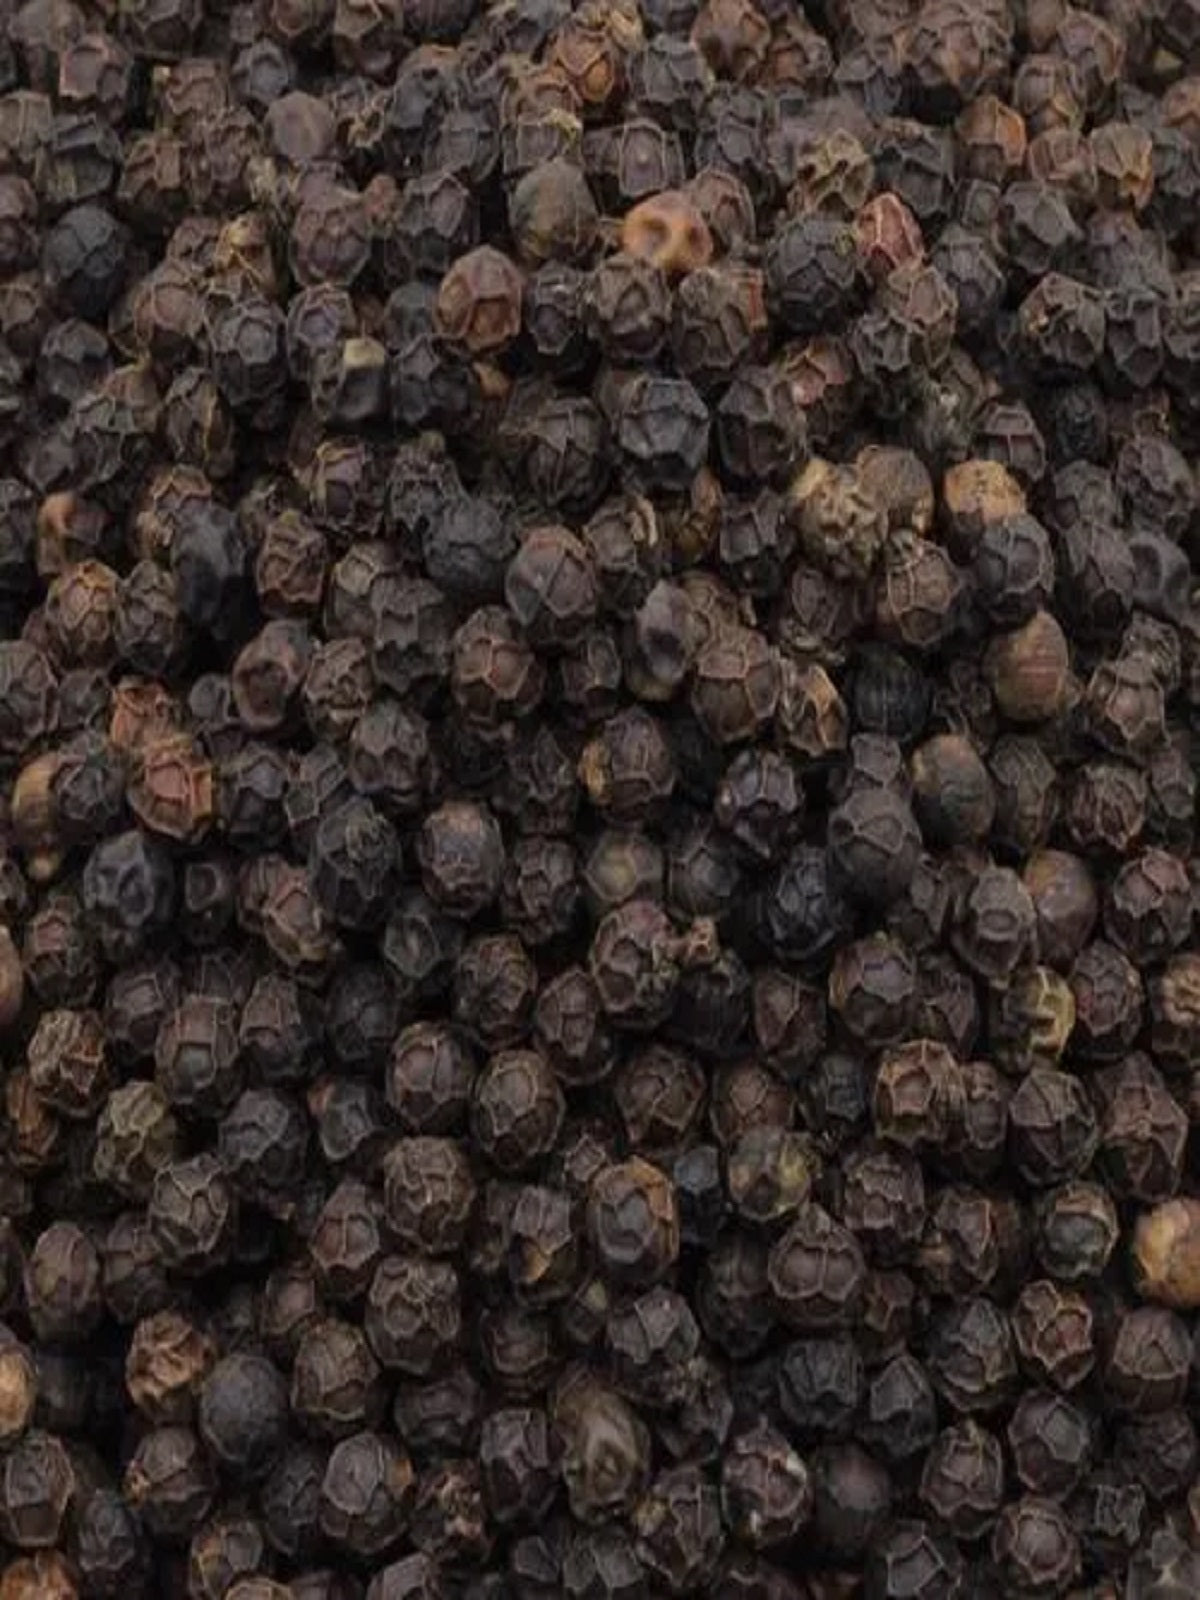 Buy the best quality whole Kali Mirch /Black Pepper online at Farmonics